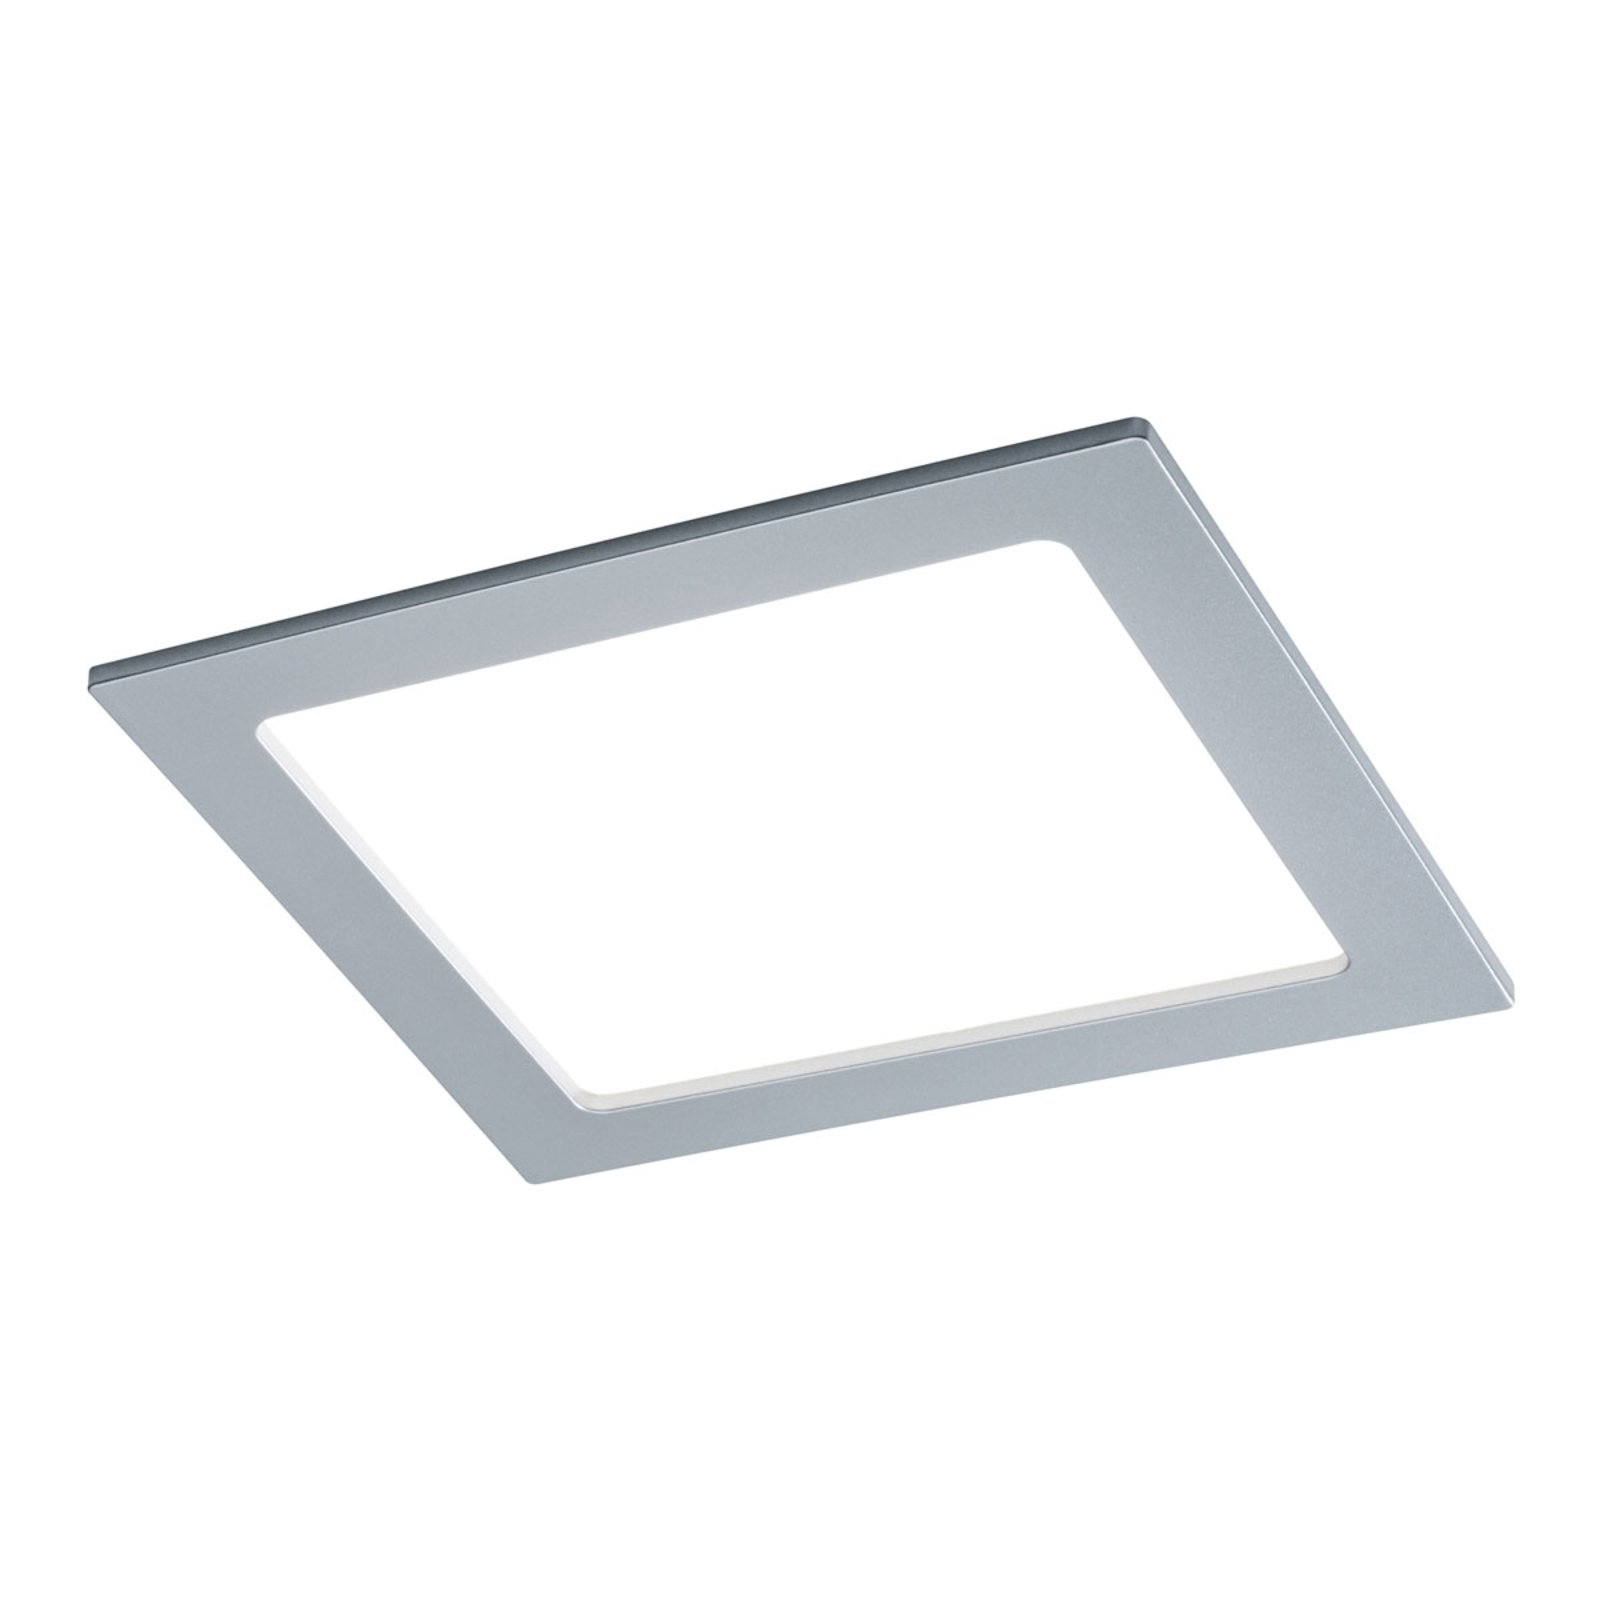 Paulmann angular LED panel, 18 W, 4,000 K, chrome